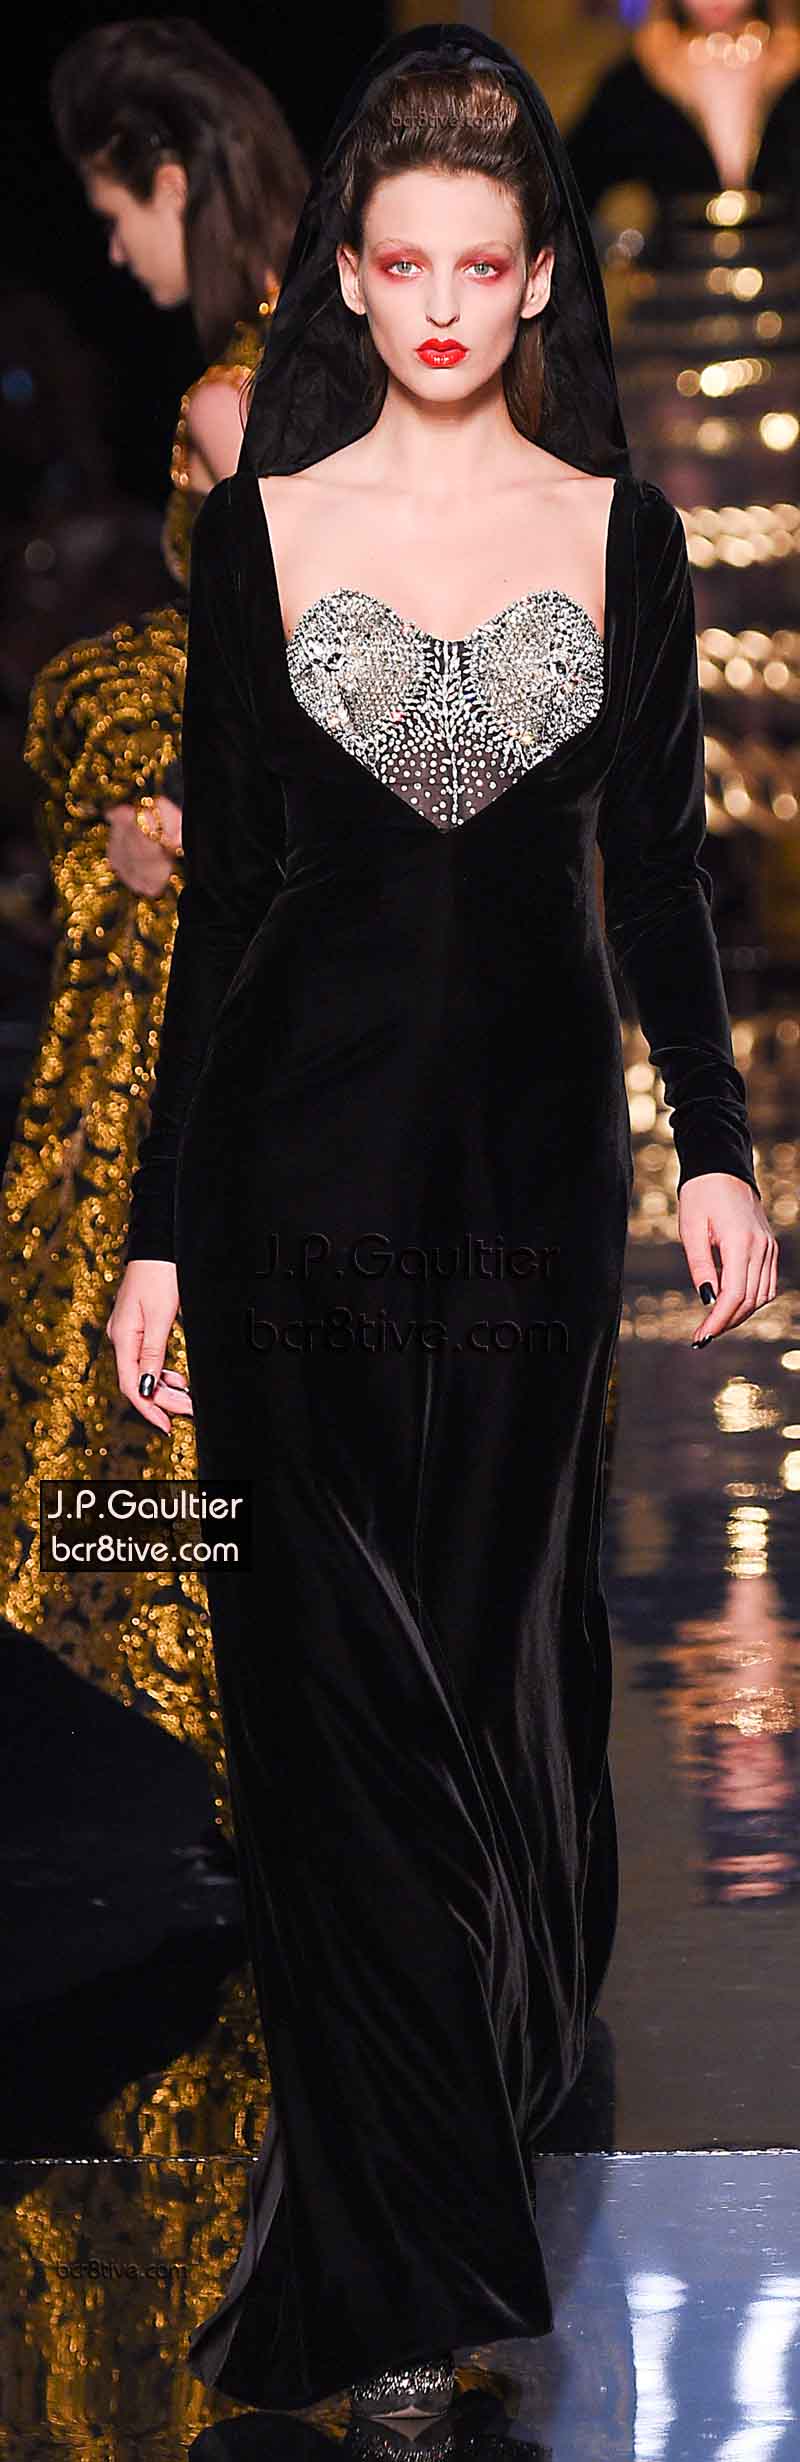 Jean Paul Gaultier Fall Winter 2014-15 Haute Couture